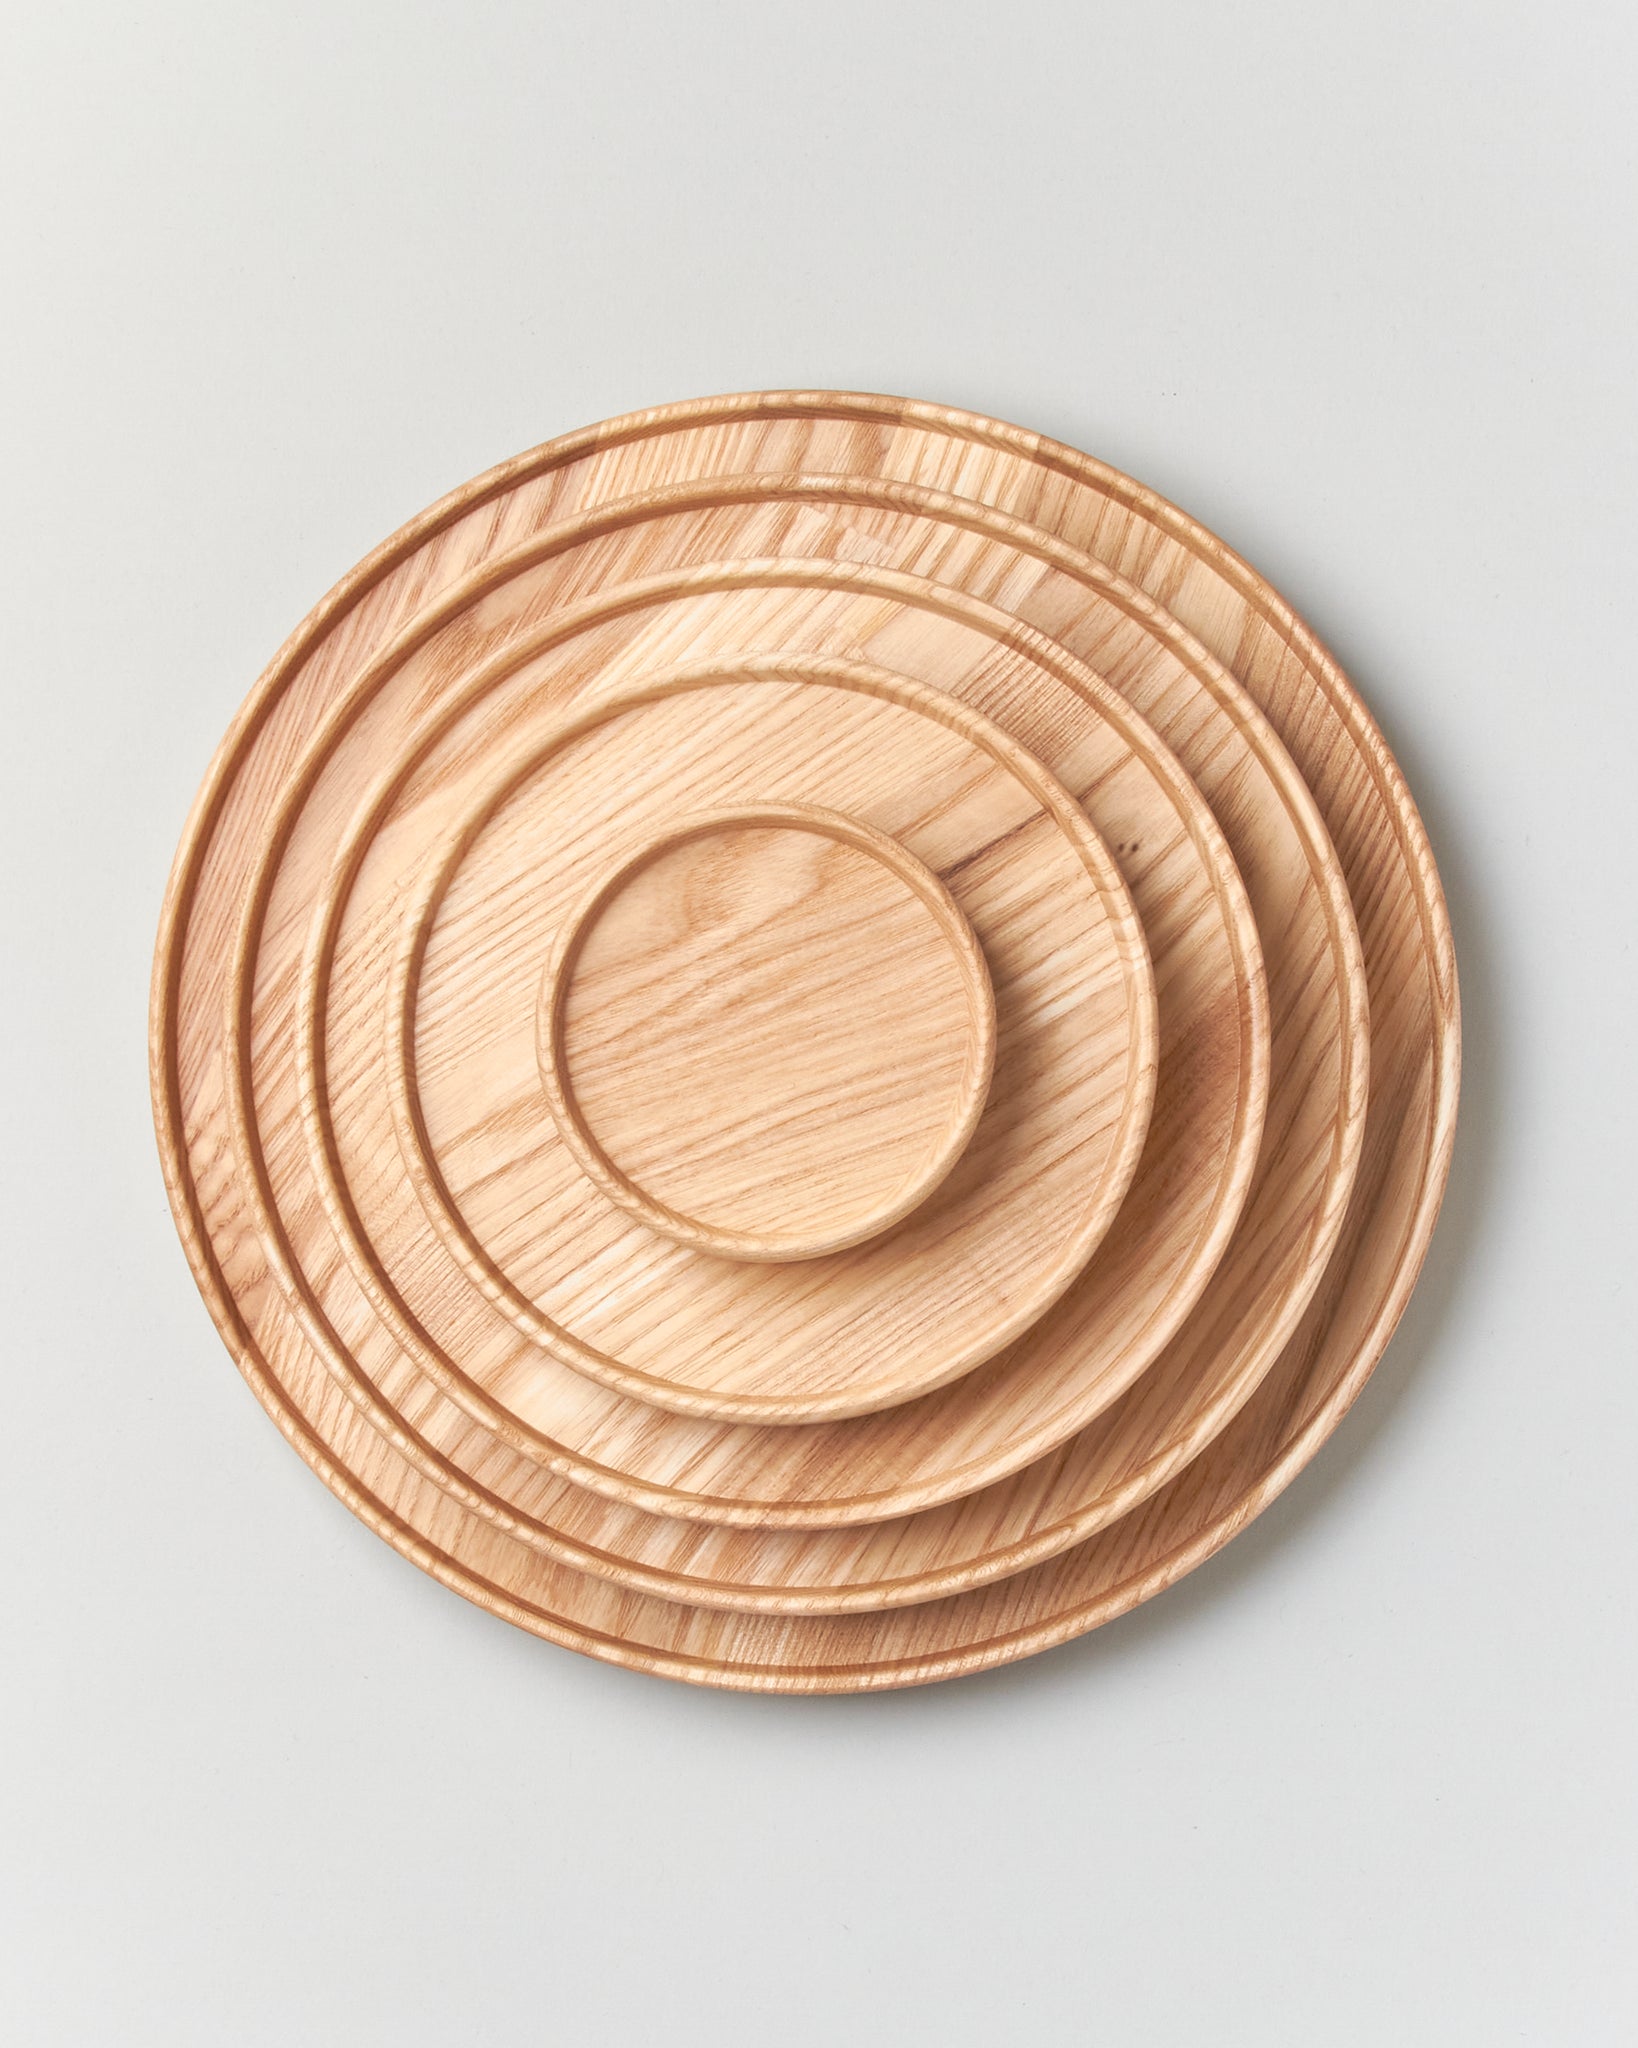 Hasami 5 5/8-inch Wood Tray